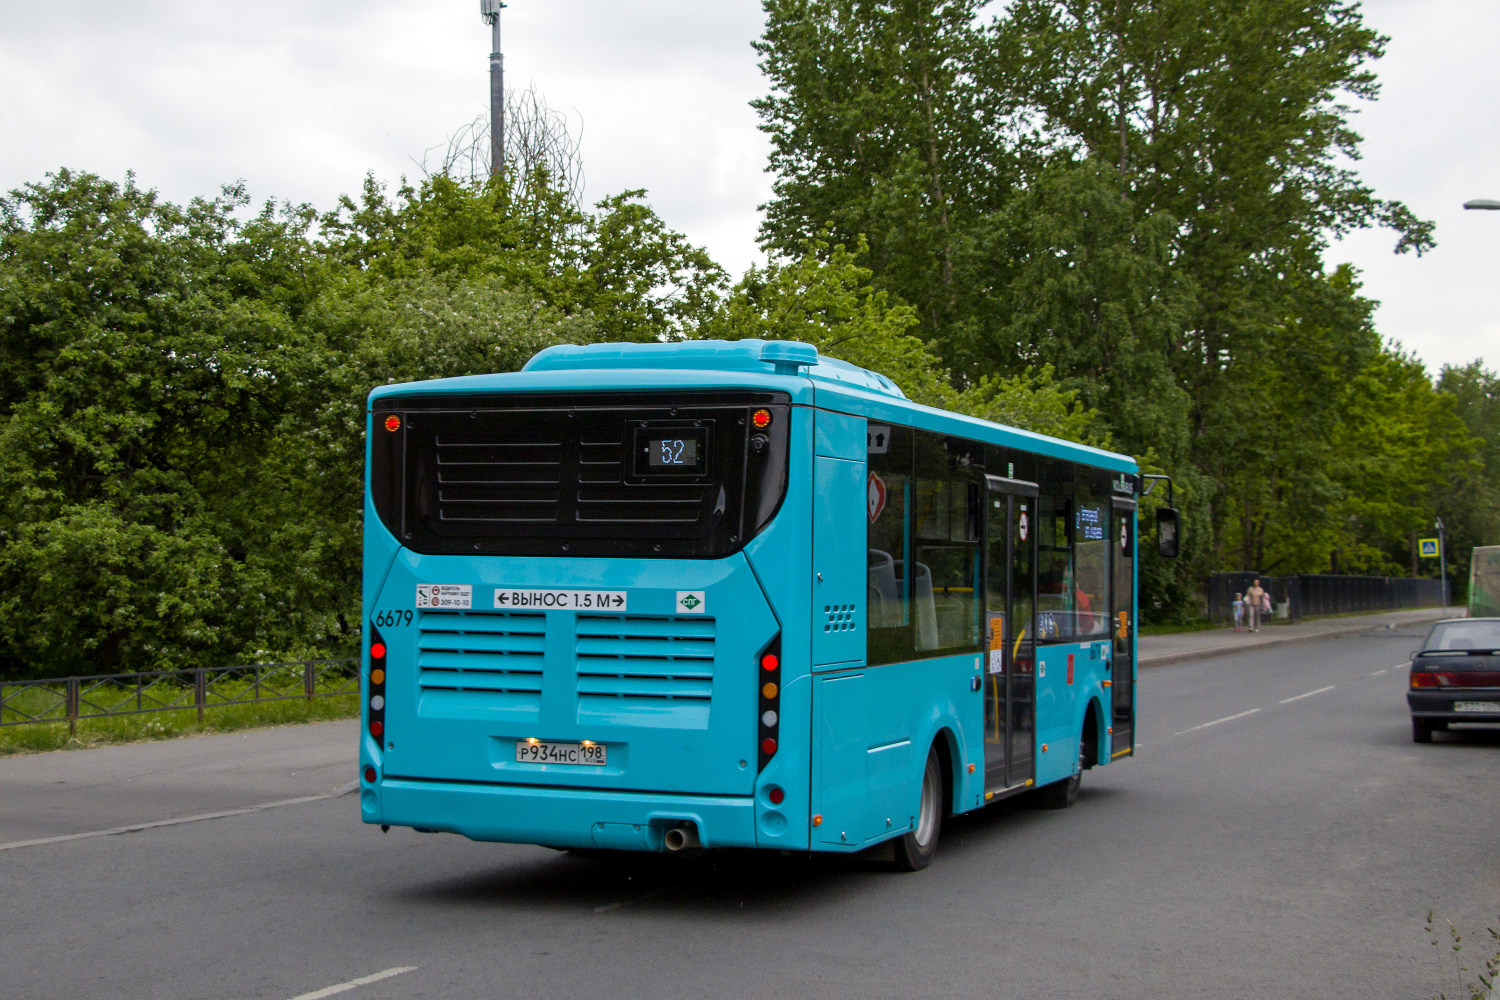 Saint Petersburg, Volgabus-4298.G4 (LNG) # 6679